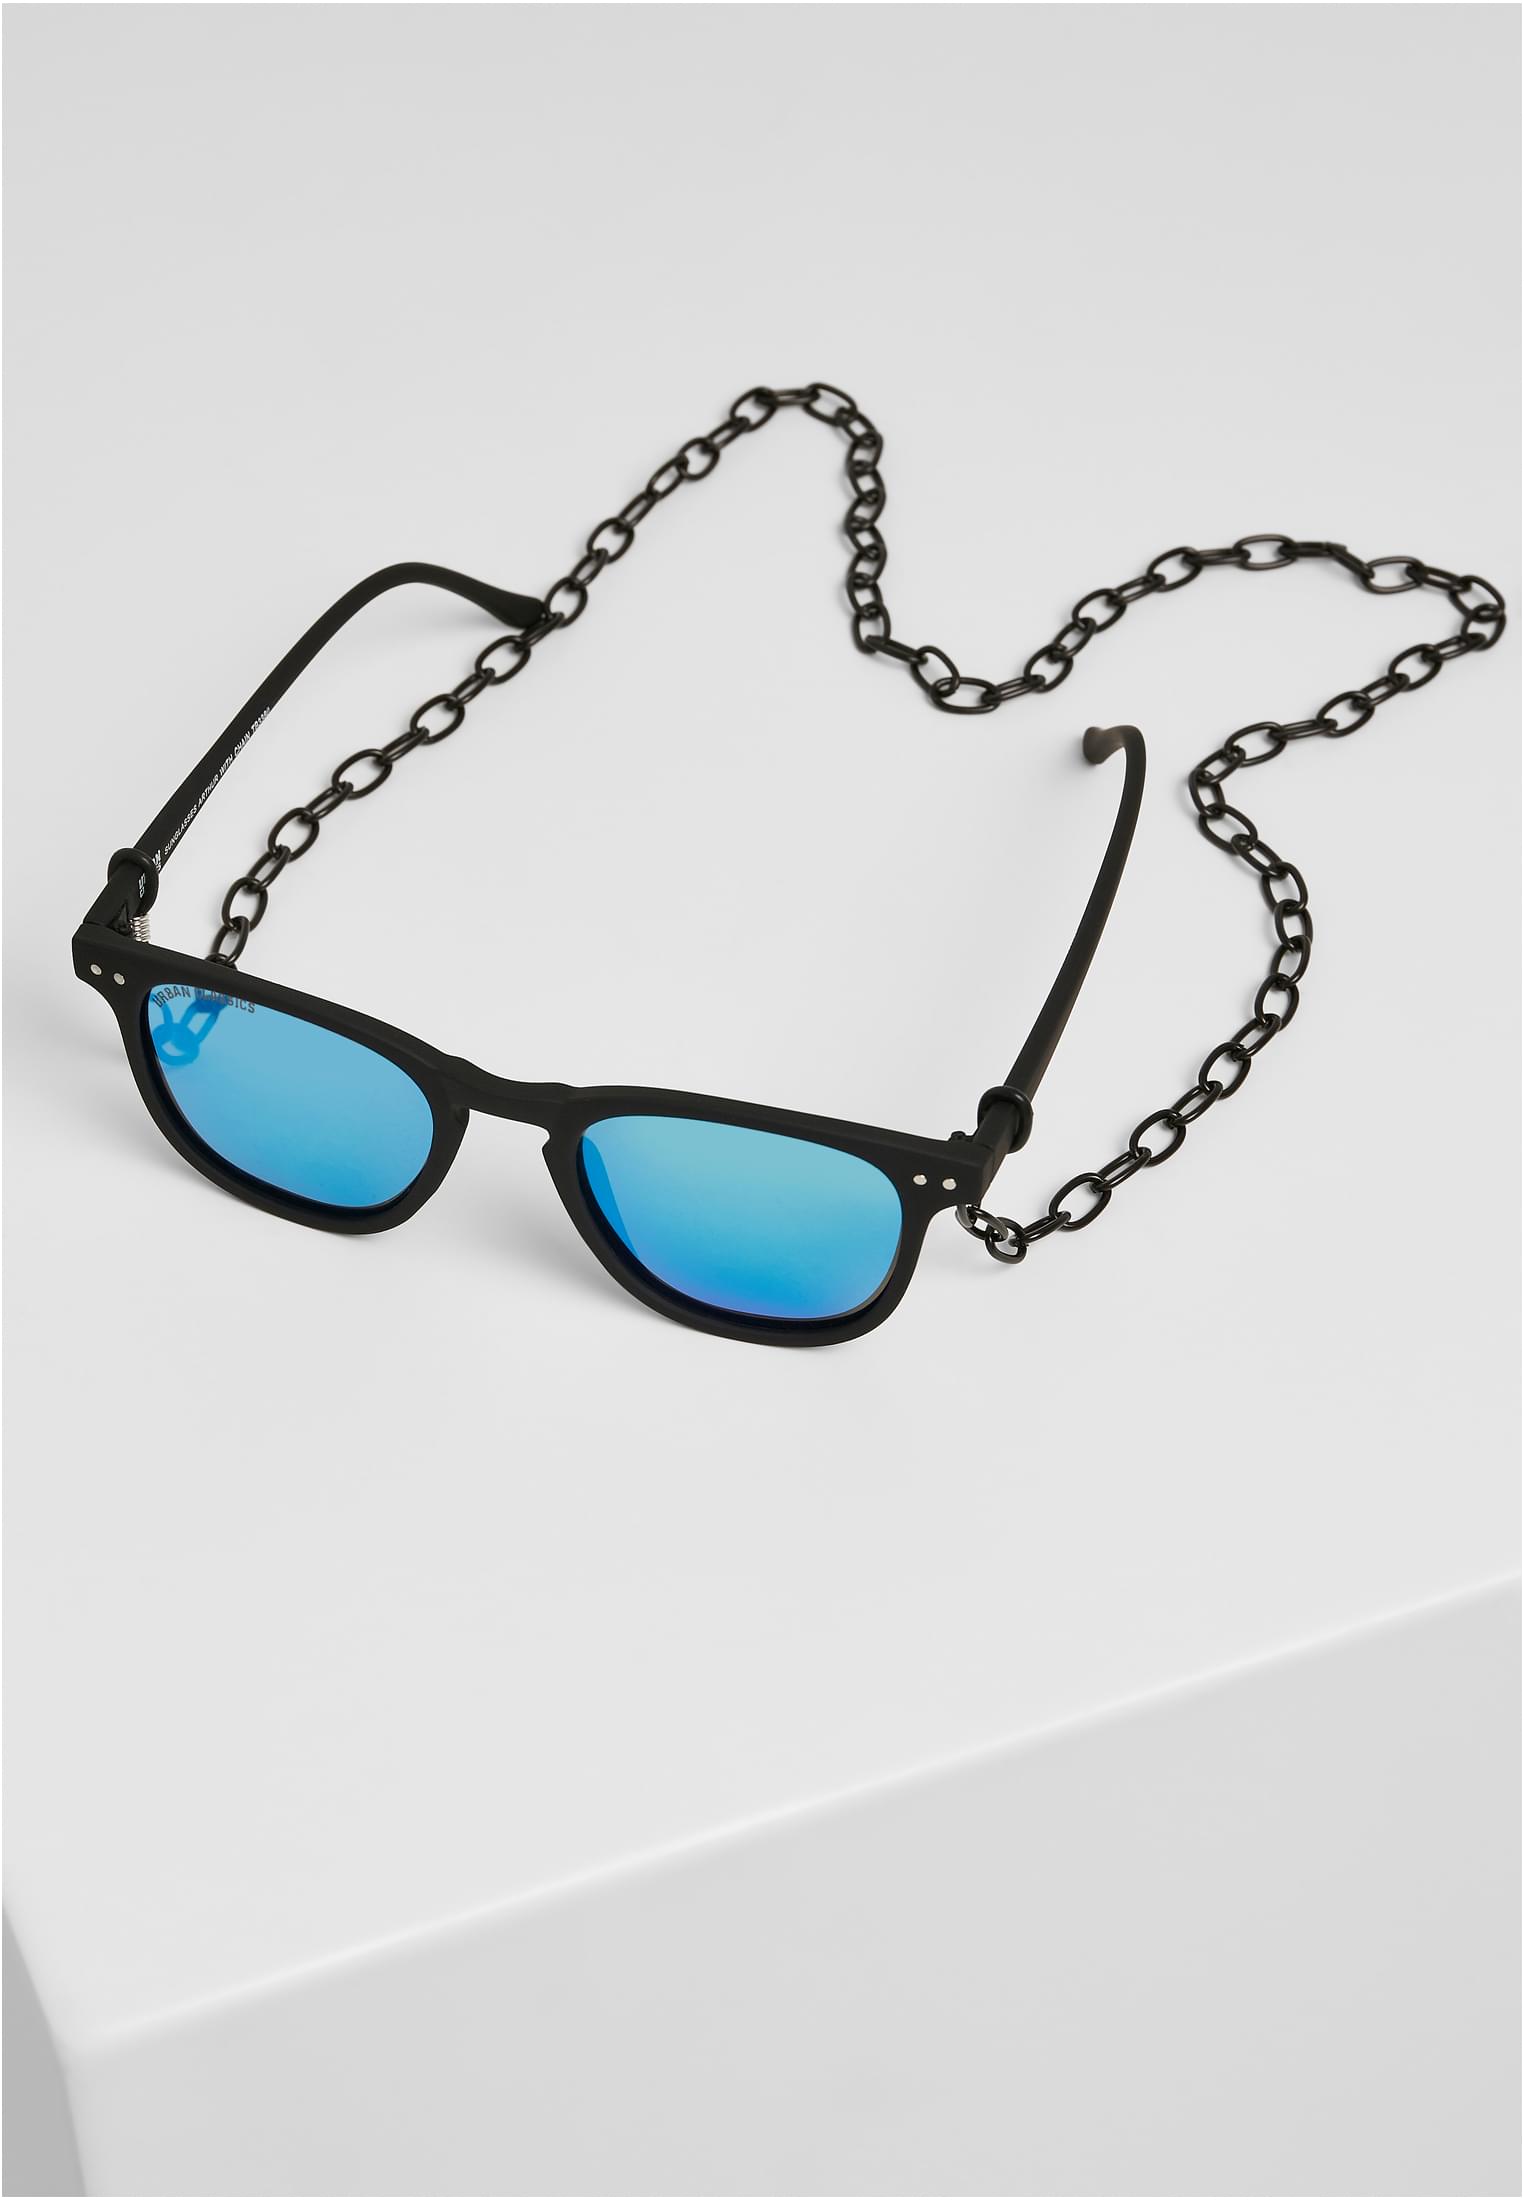 Sunglasses Arthur Chain-TB3380 with